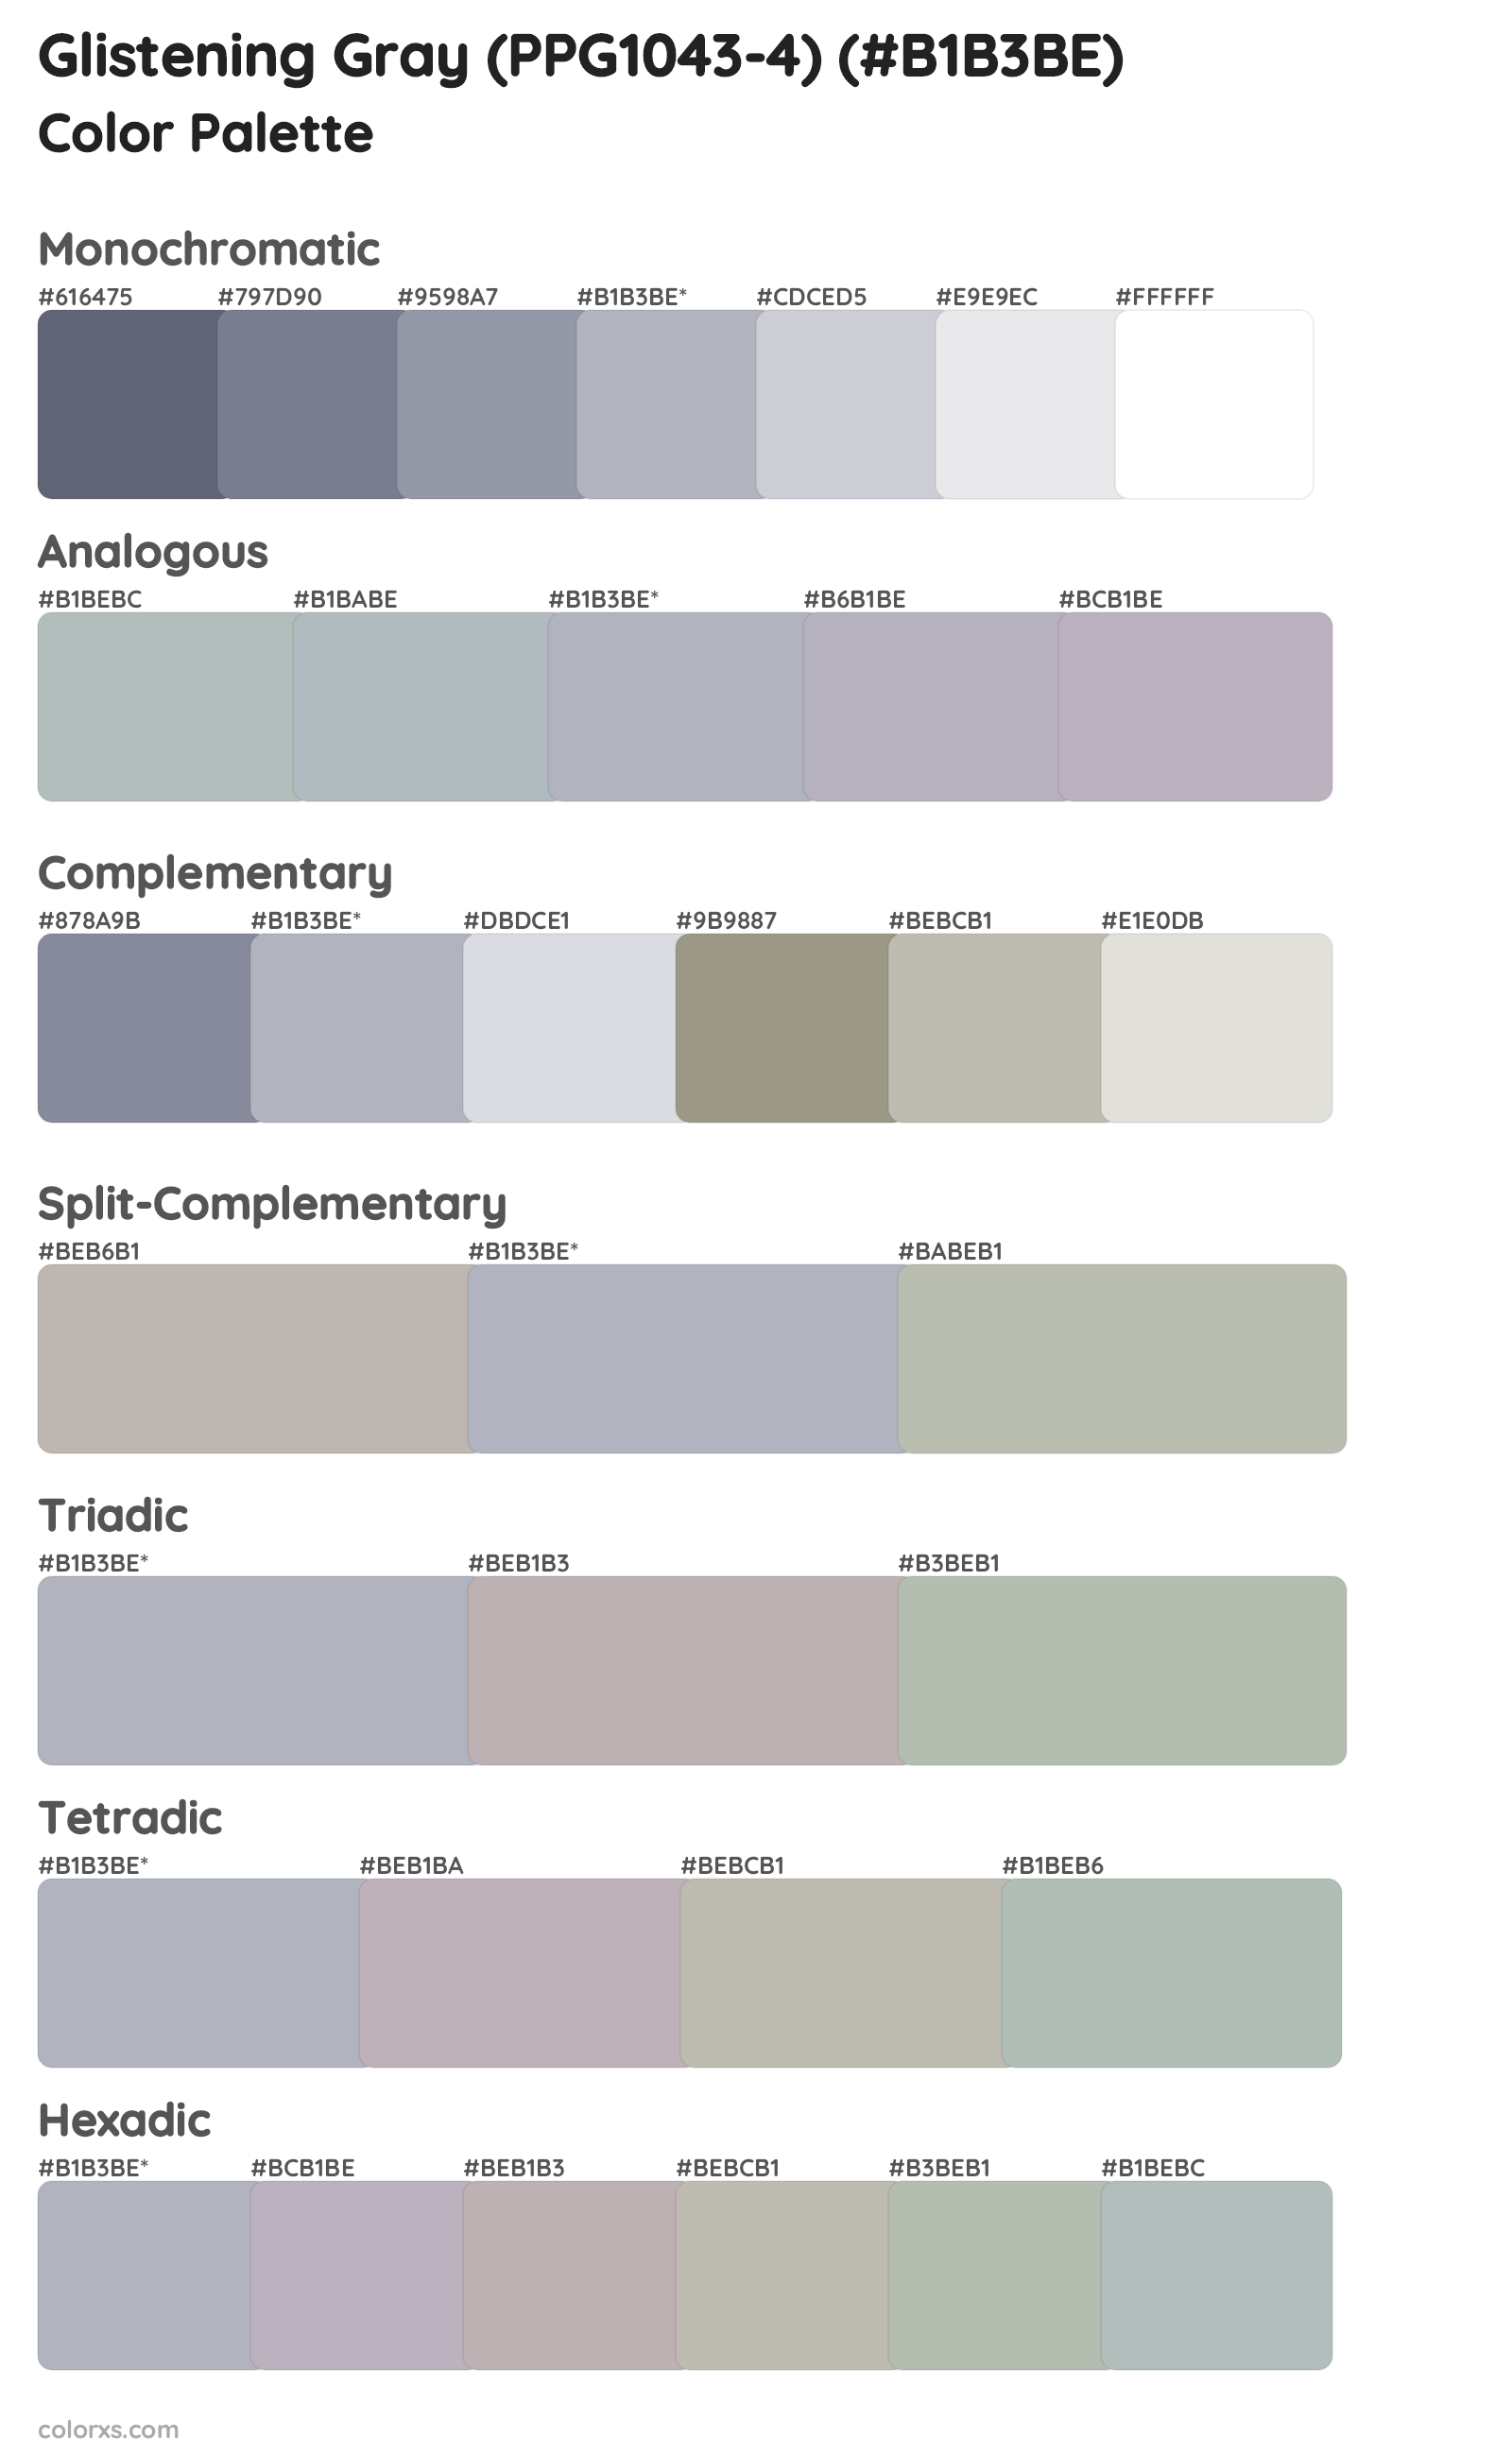 Glistening Gray (PPG1043-4) Color Scheme Palettes